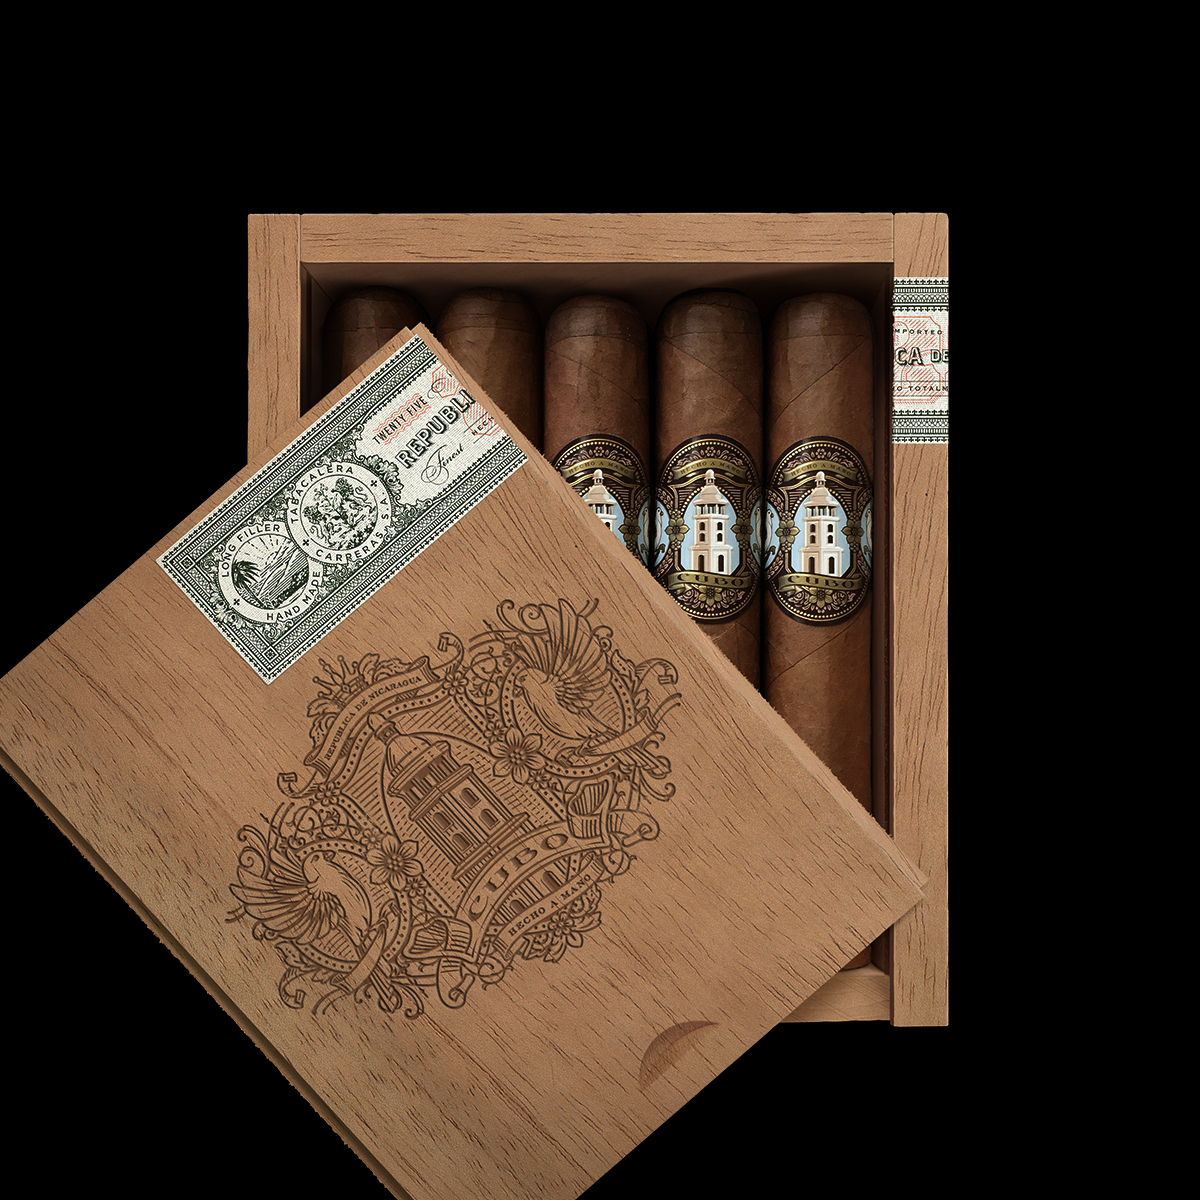 cigar cigars package box cubo dapper co company trogon bird cuba cuban tobacco crest vintage